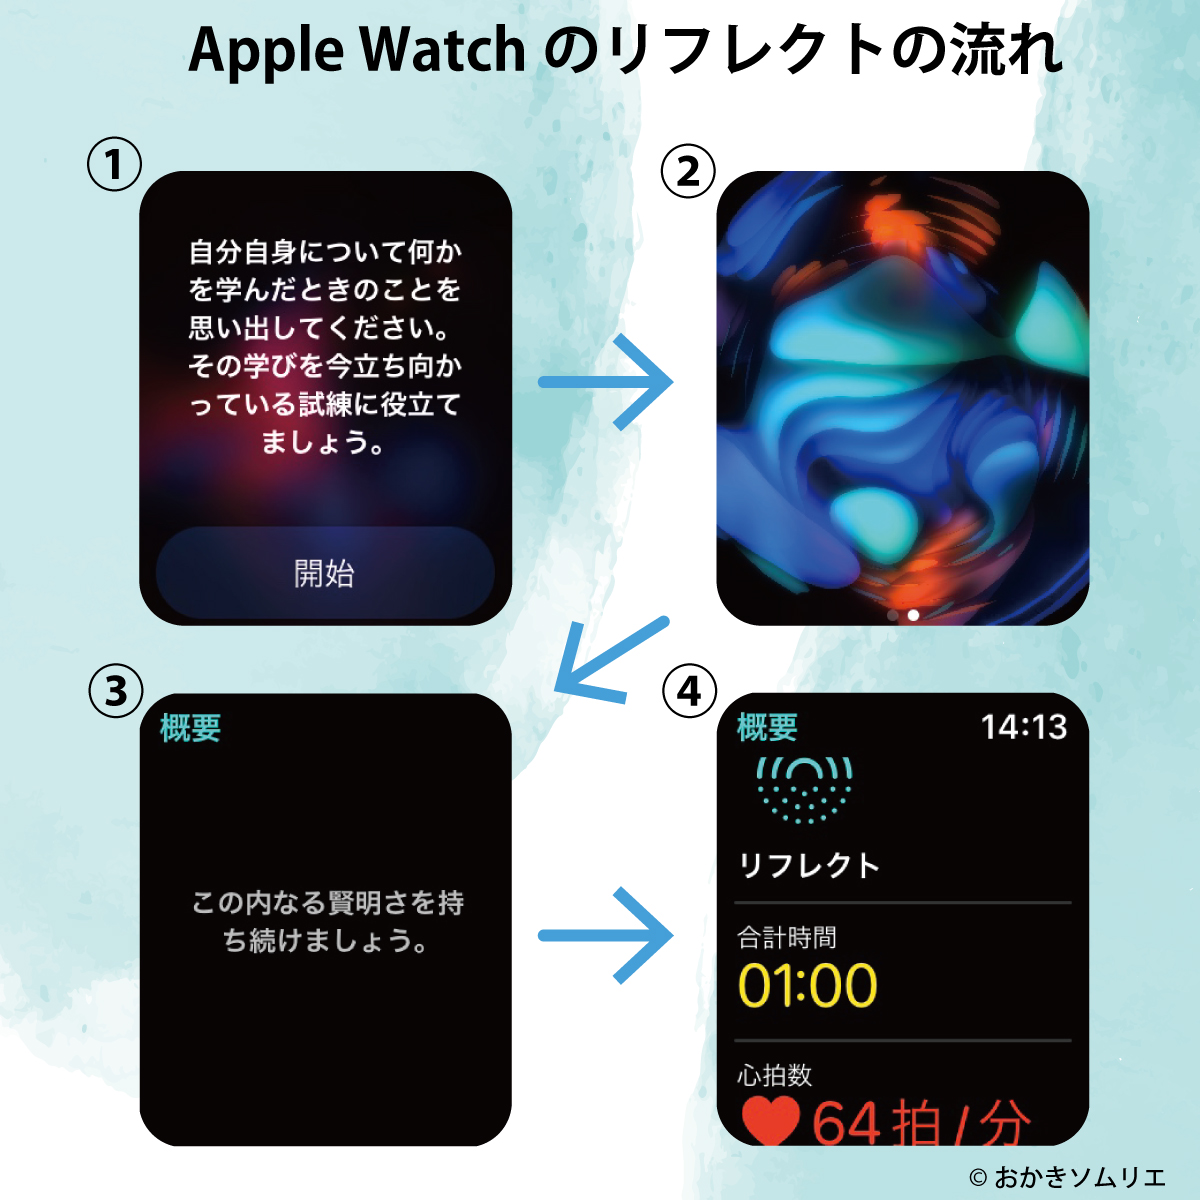 Apple Watch Reflective Flow（イメーズ図）作成者：おかきソムリエ